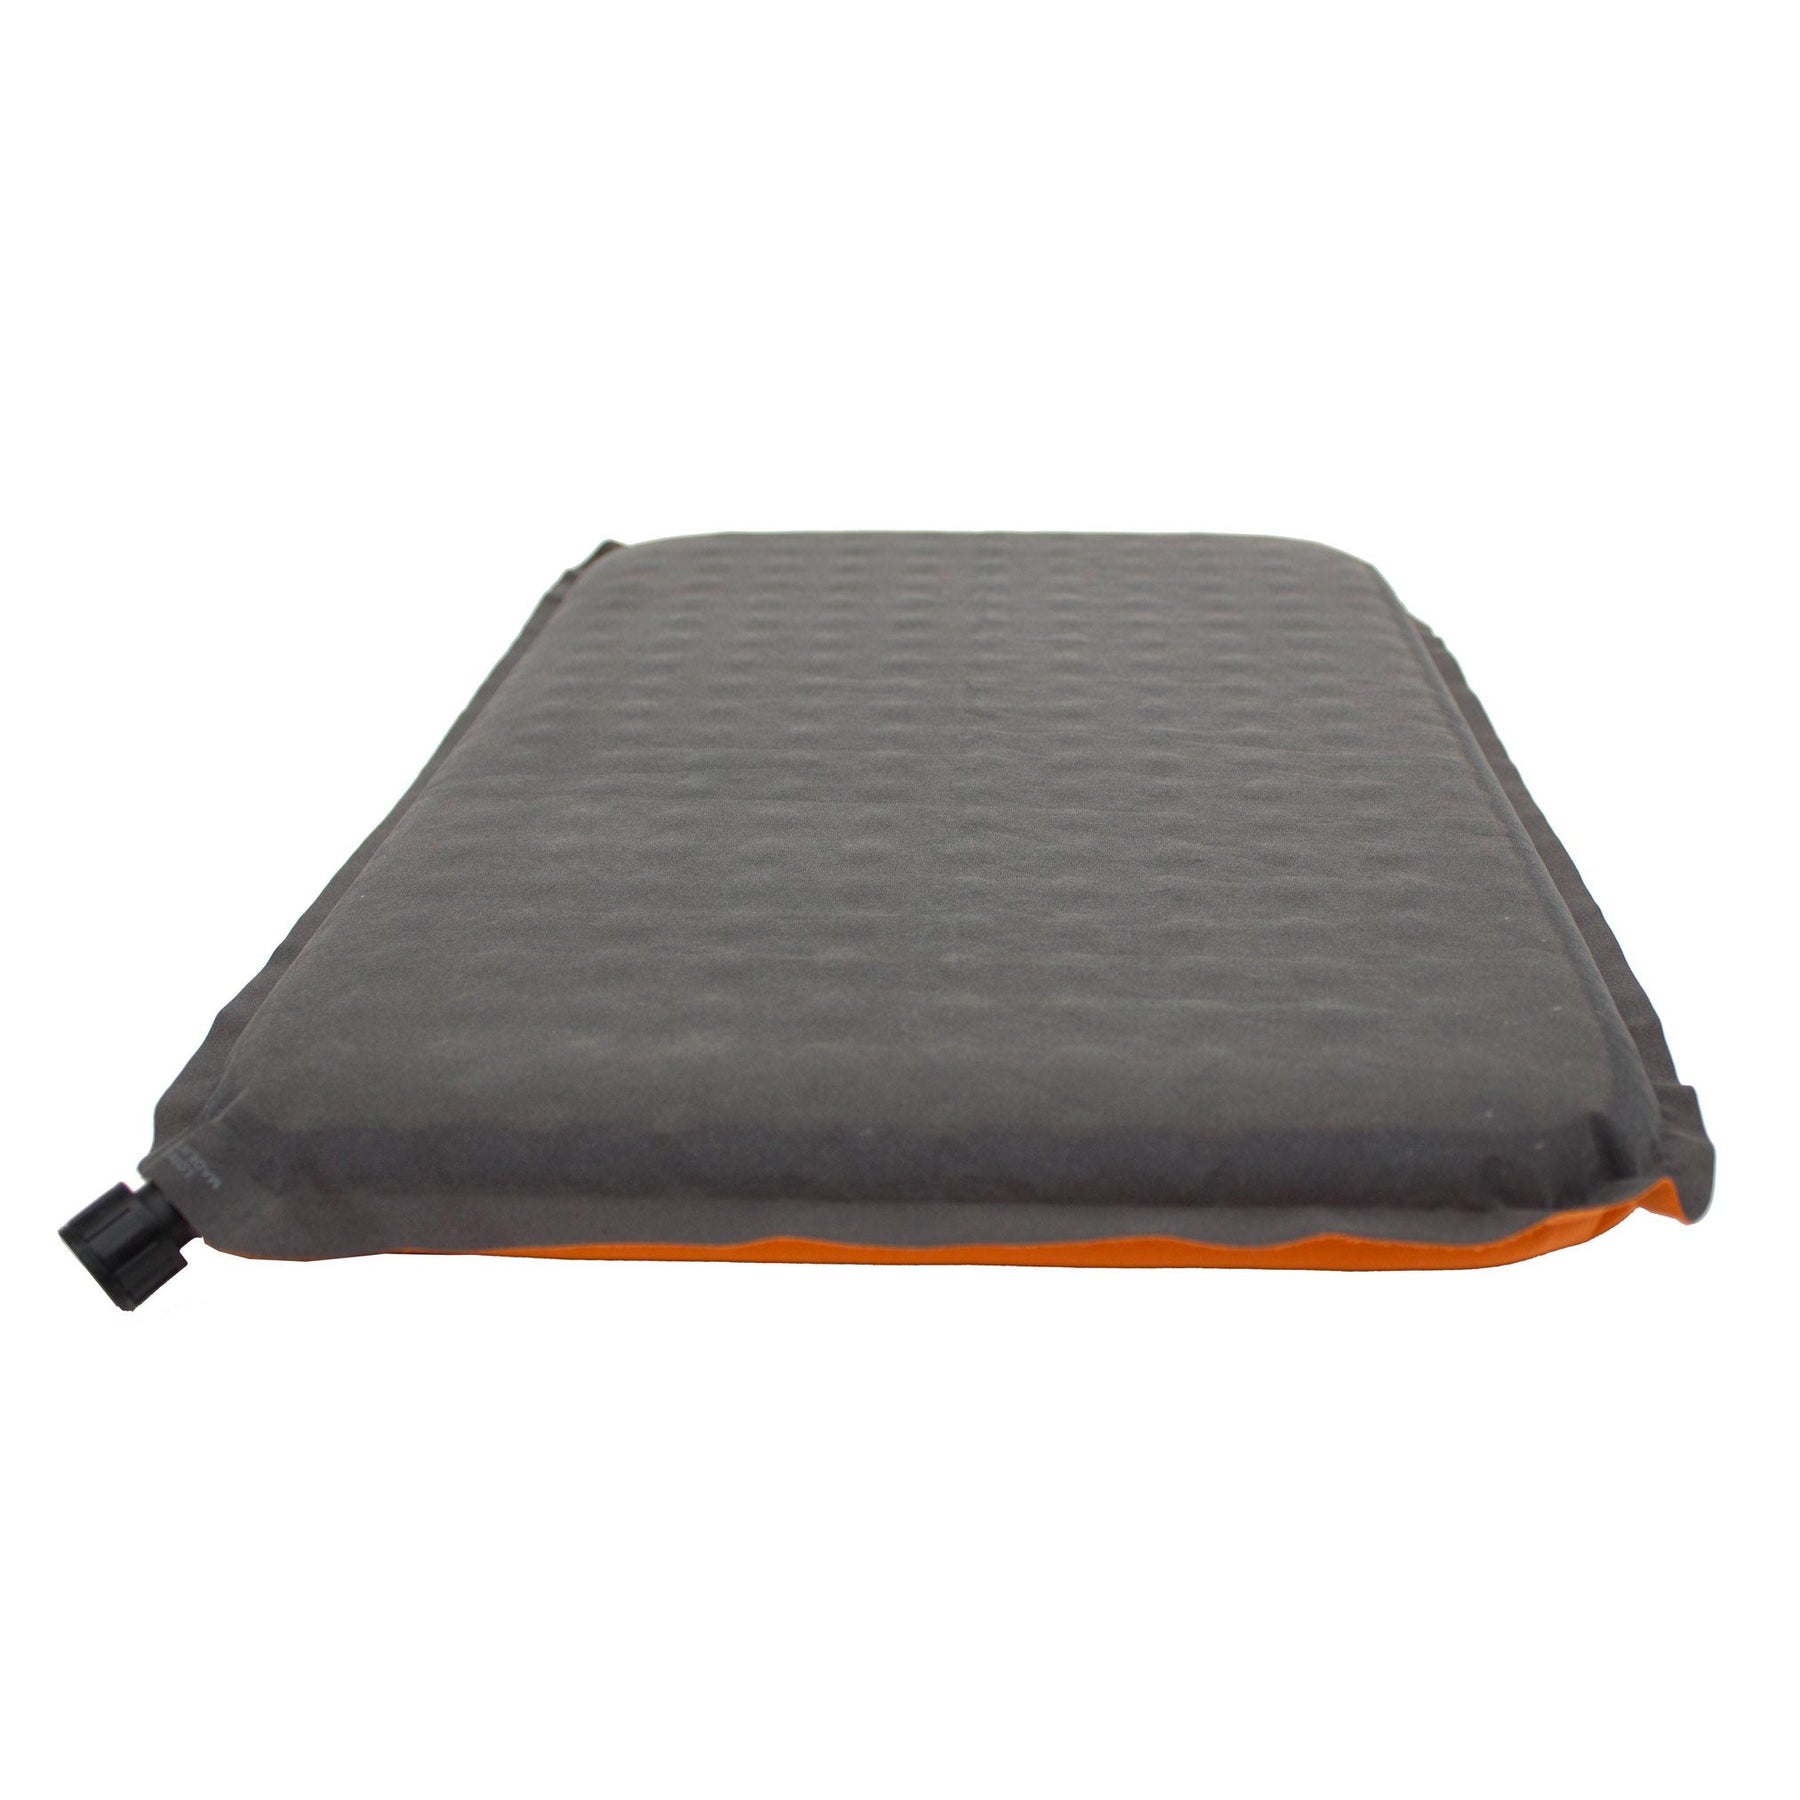 TETON Sports ComfortLite™ Self Inflating Cushion 1044